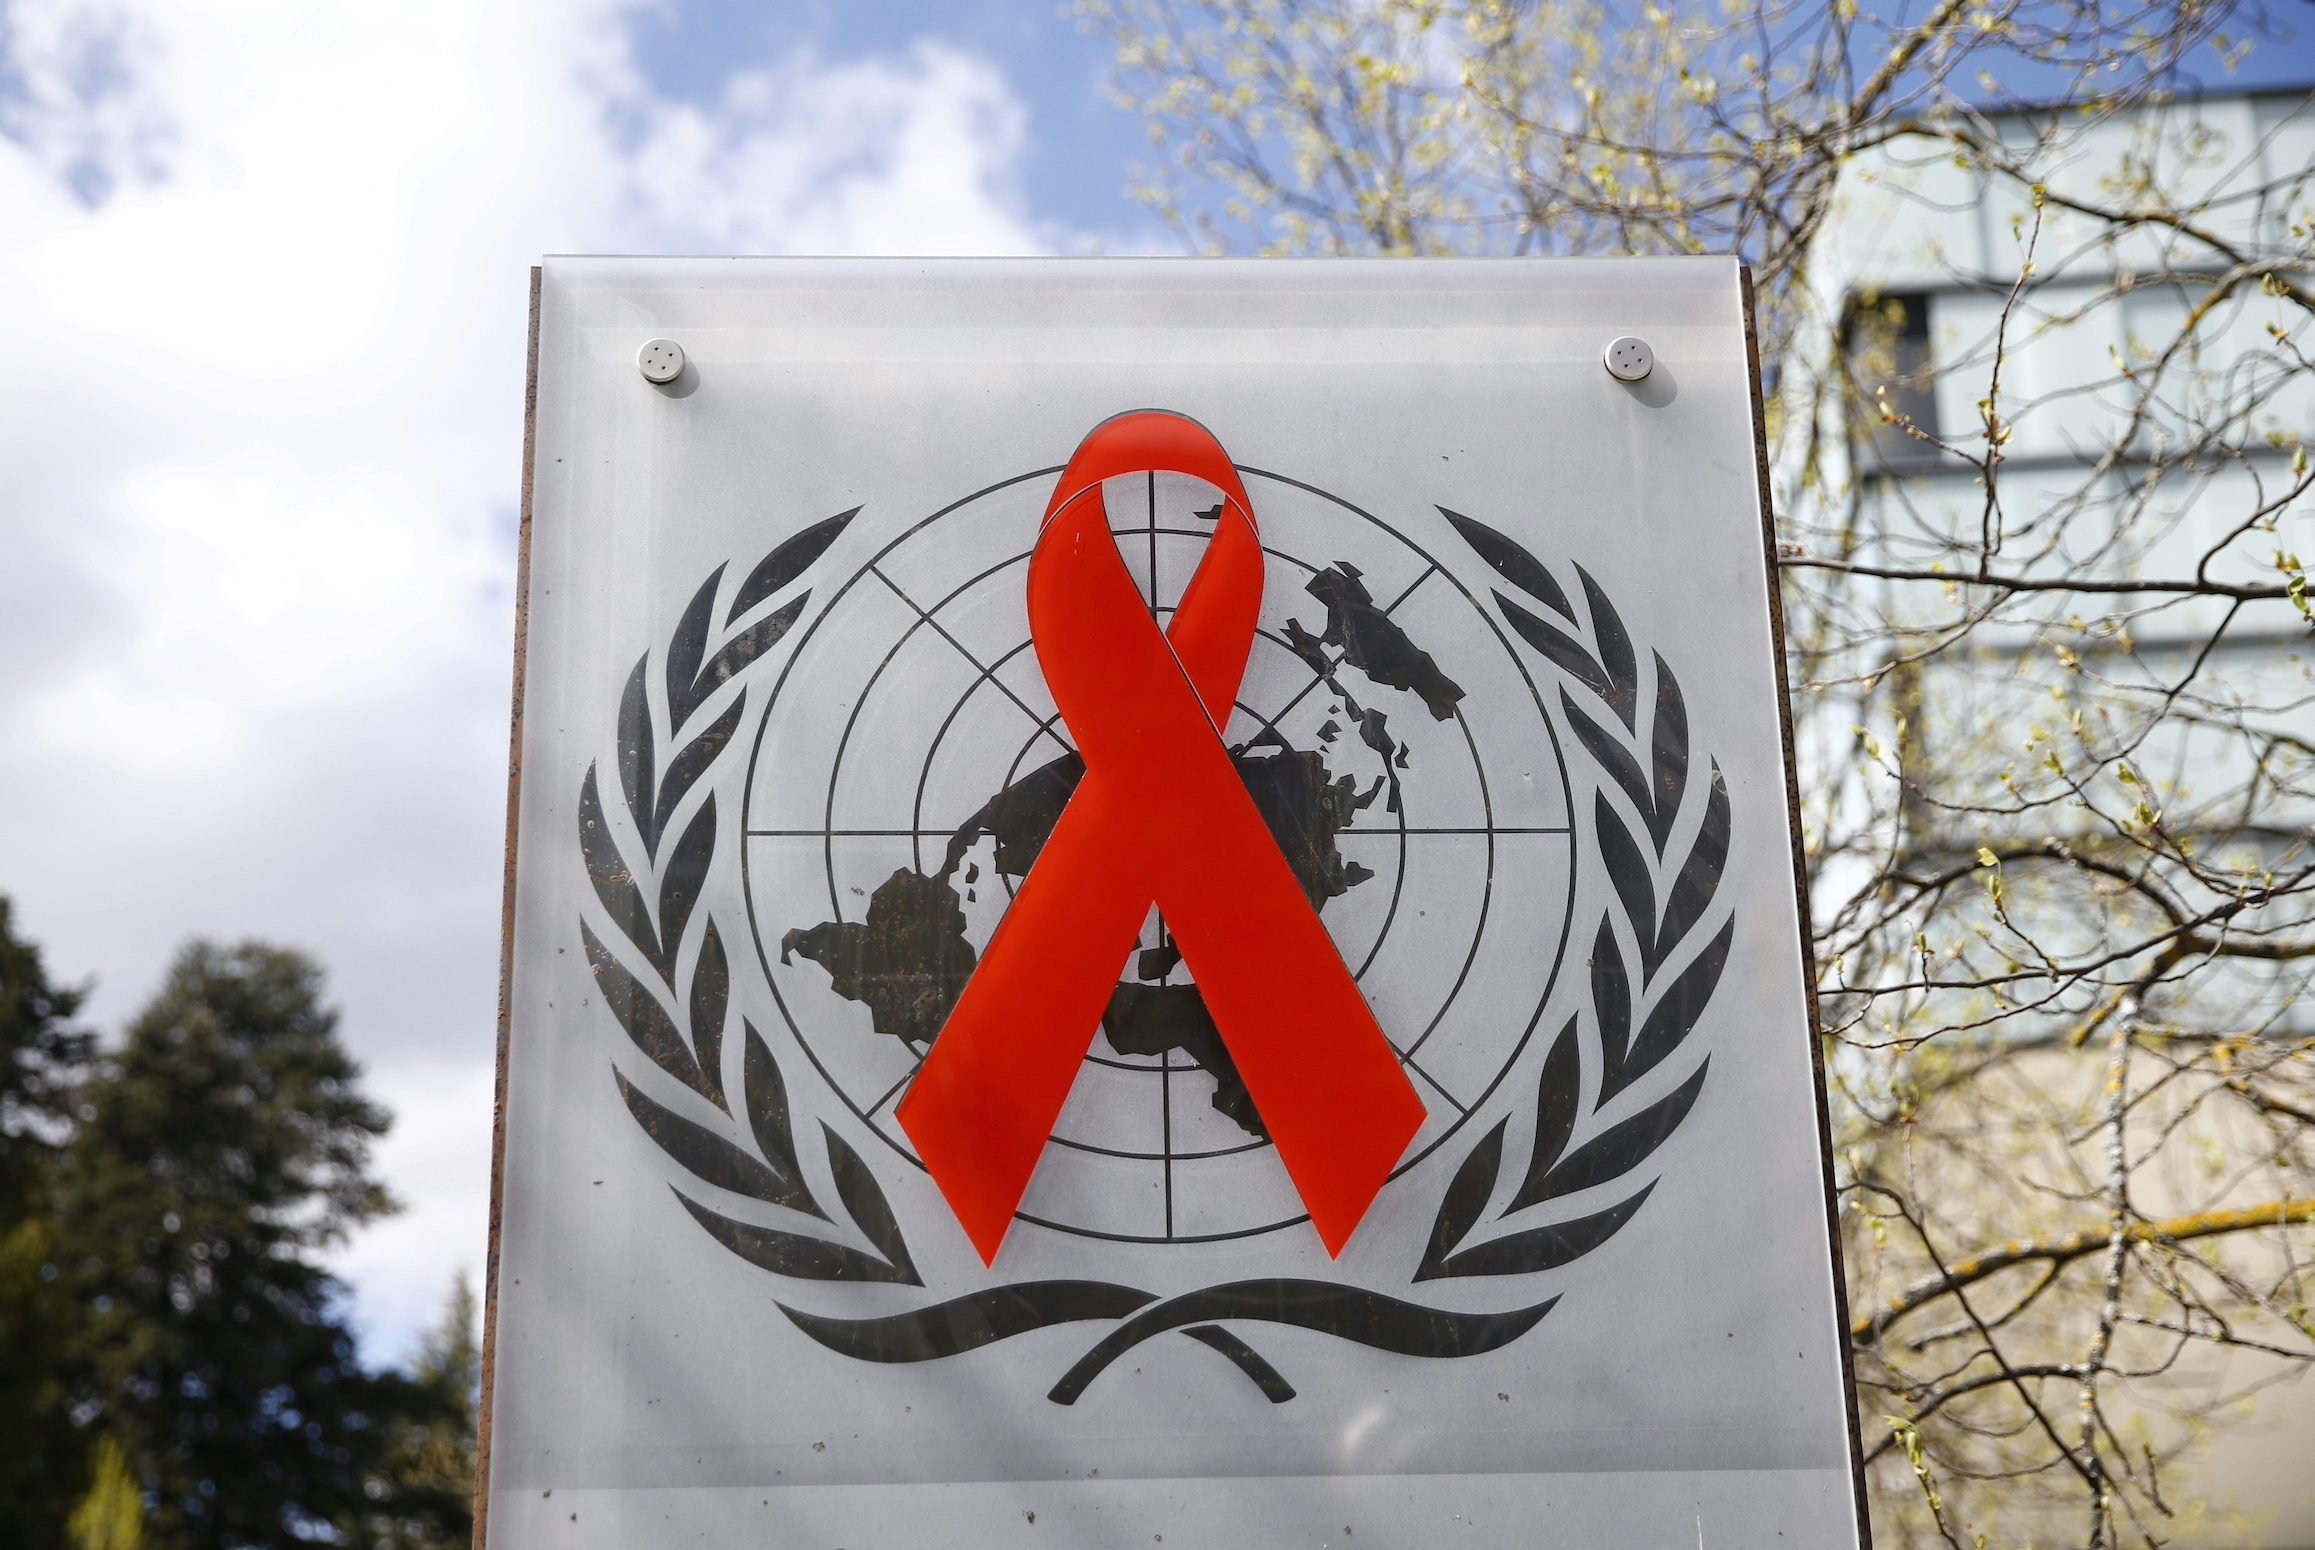 Scrapping gay sex bans key to fighting HIV, says UNAIDS ambassador